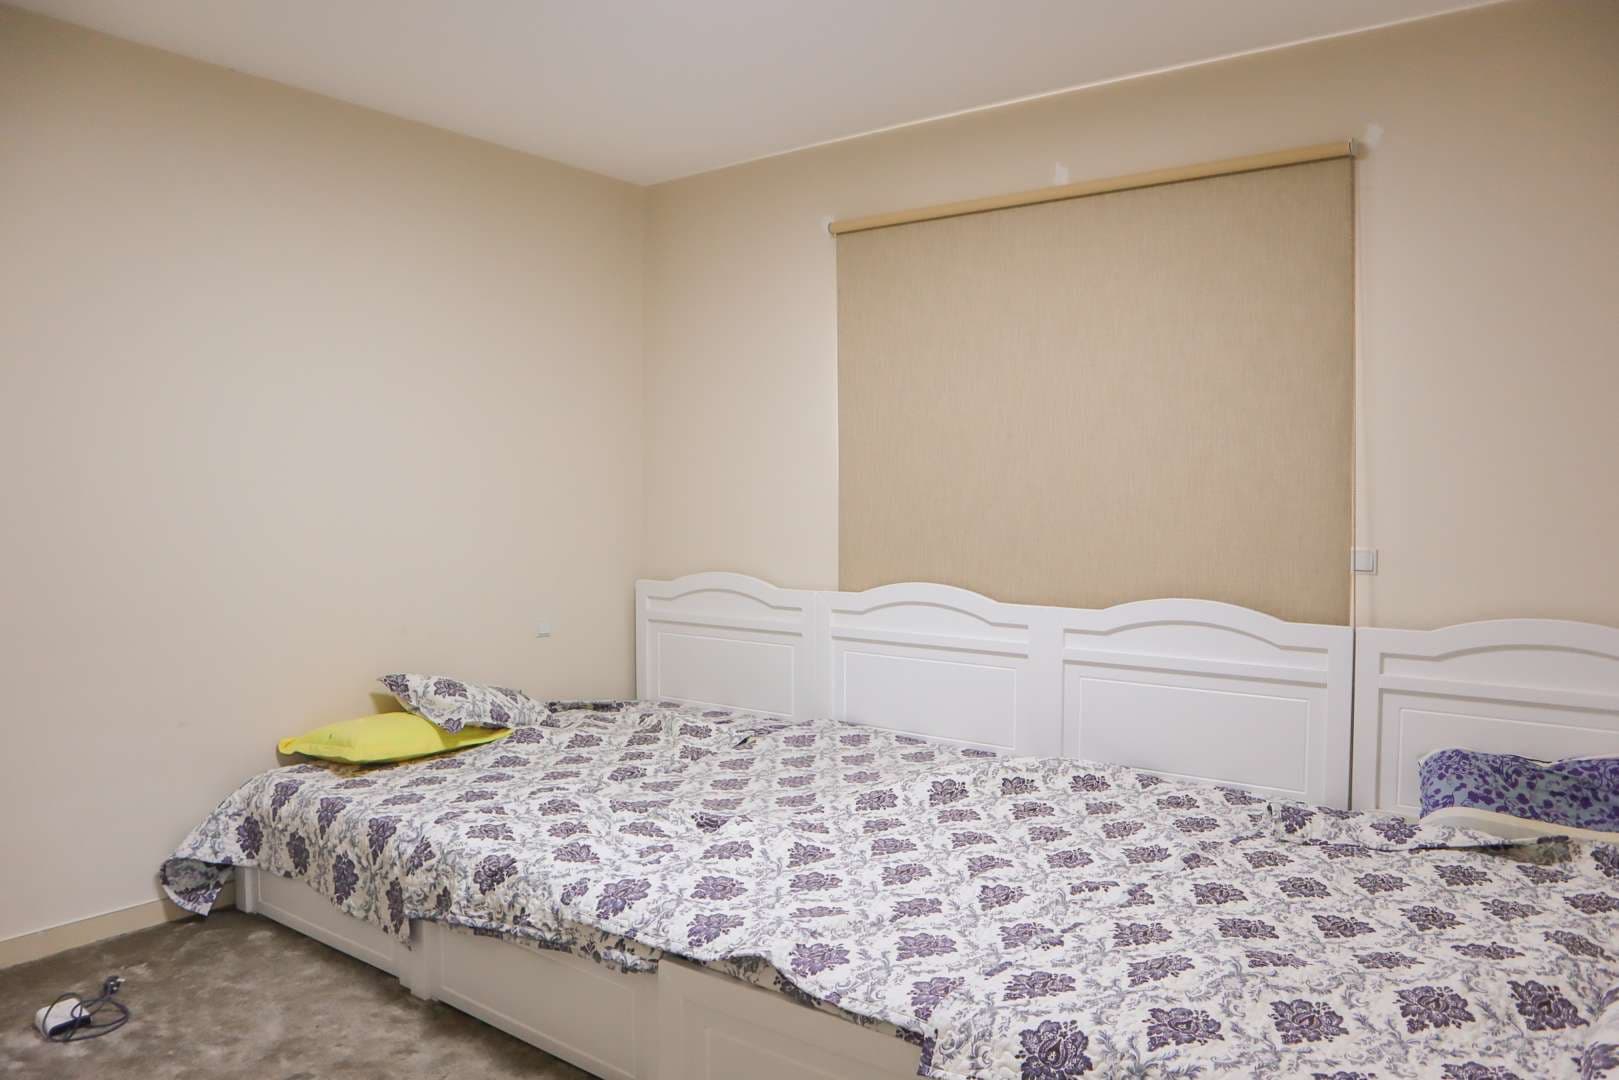 4 Bedroom Townhouse For Rent Mira Lp10896 1afbfa660f4b7000.jpg